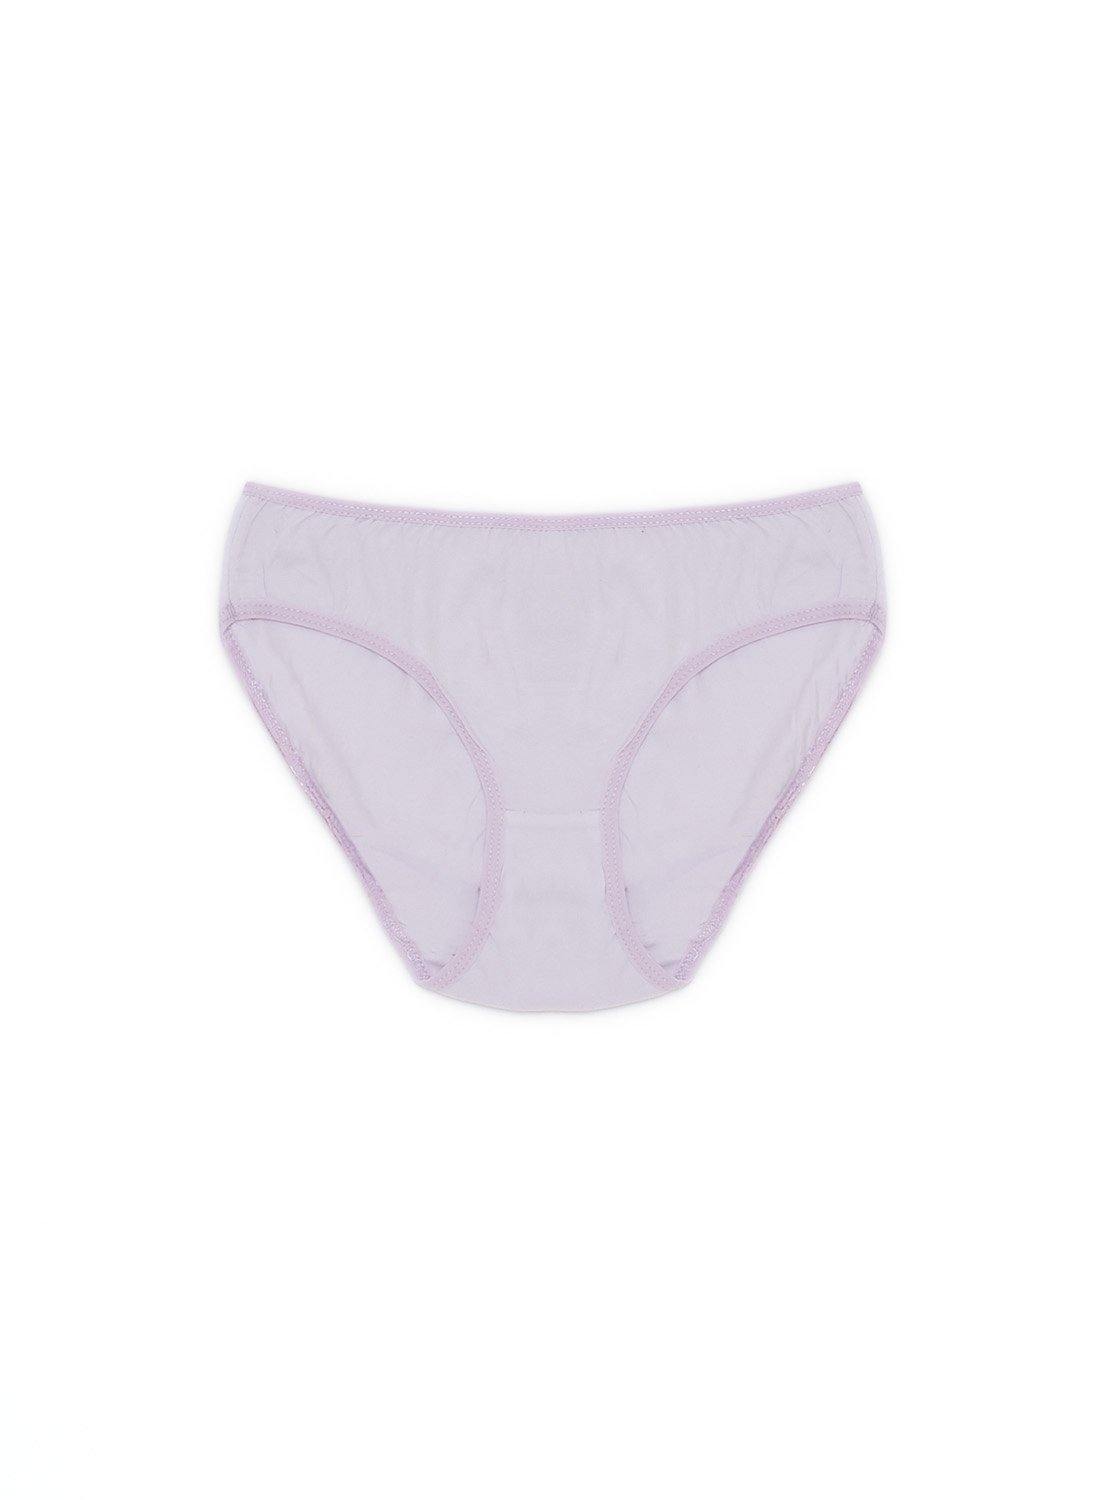 Eve Chantelle Multi Color Underwear - MIDI Cut - Pack Of 3 Panties For Women - chantelleve